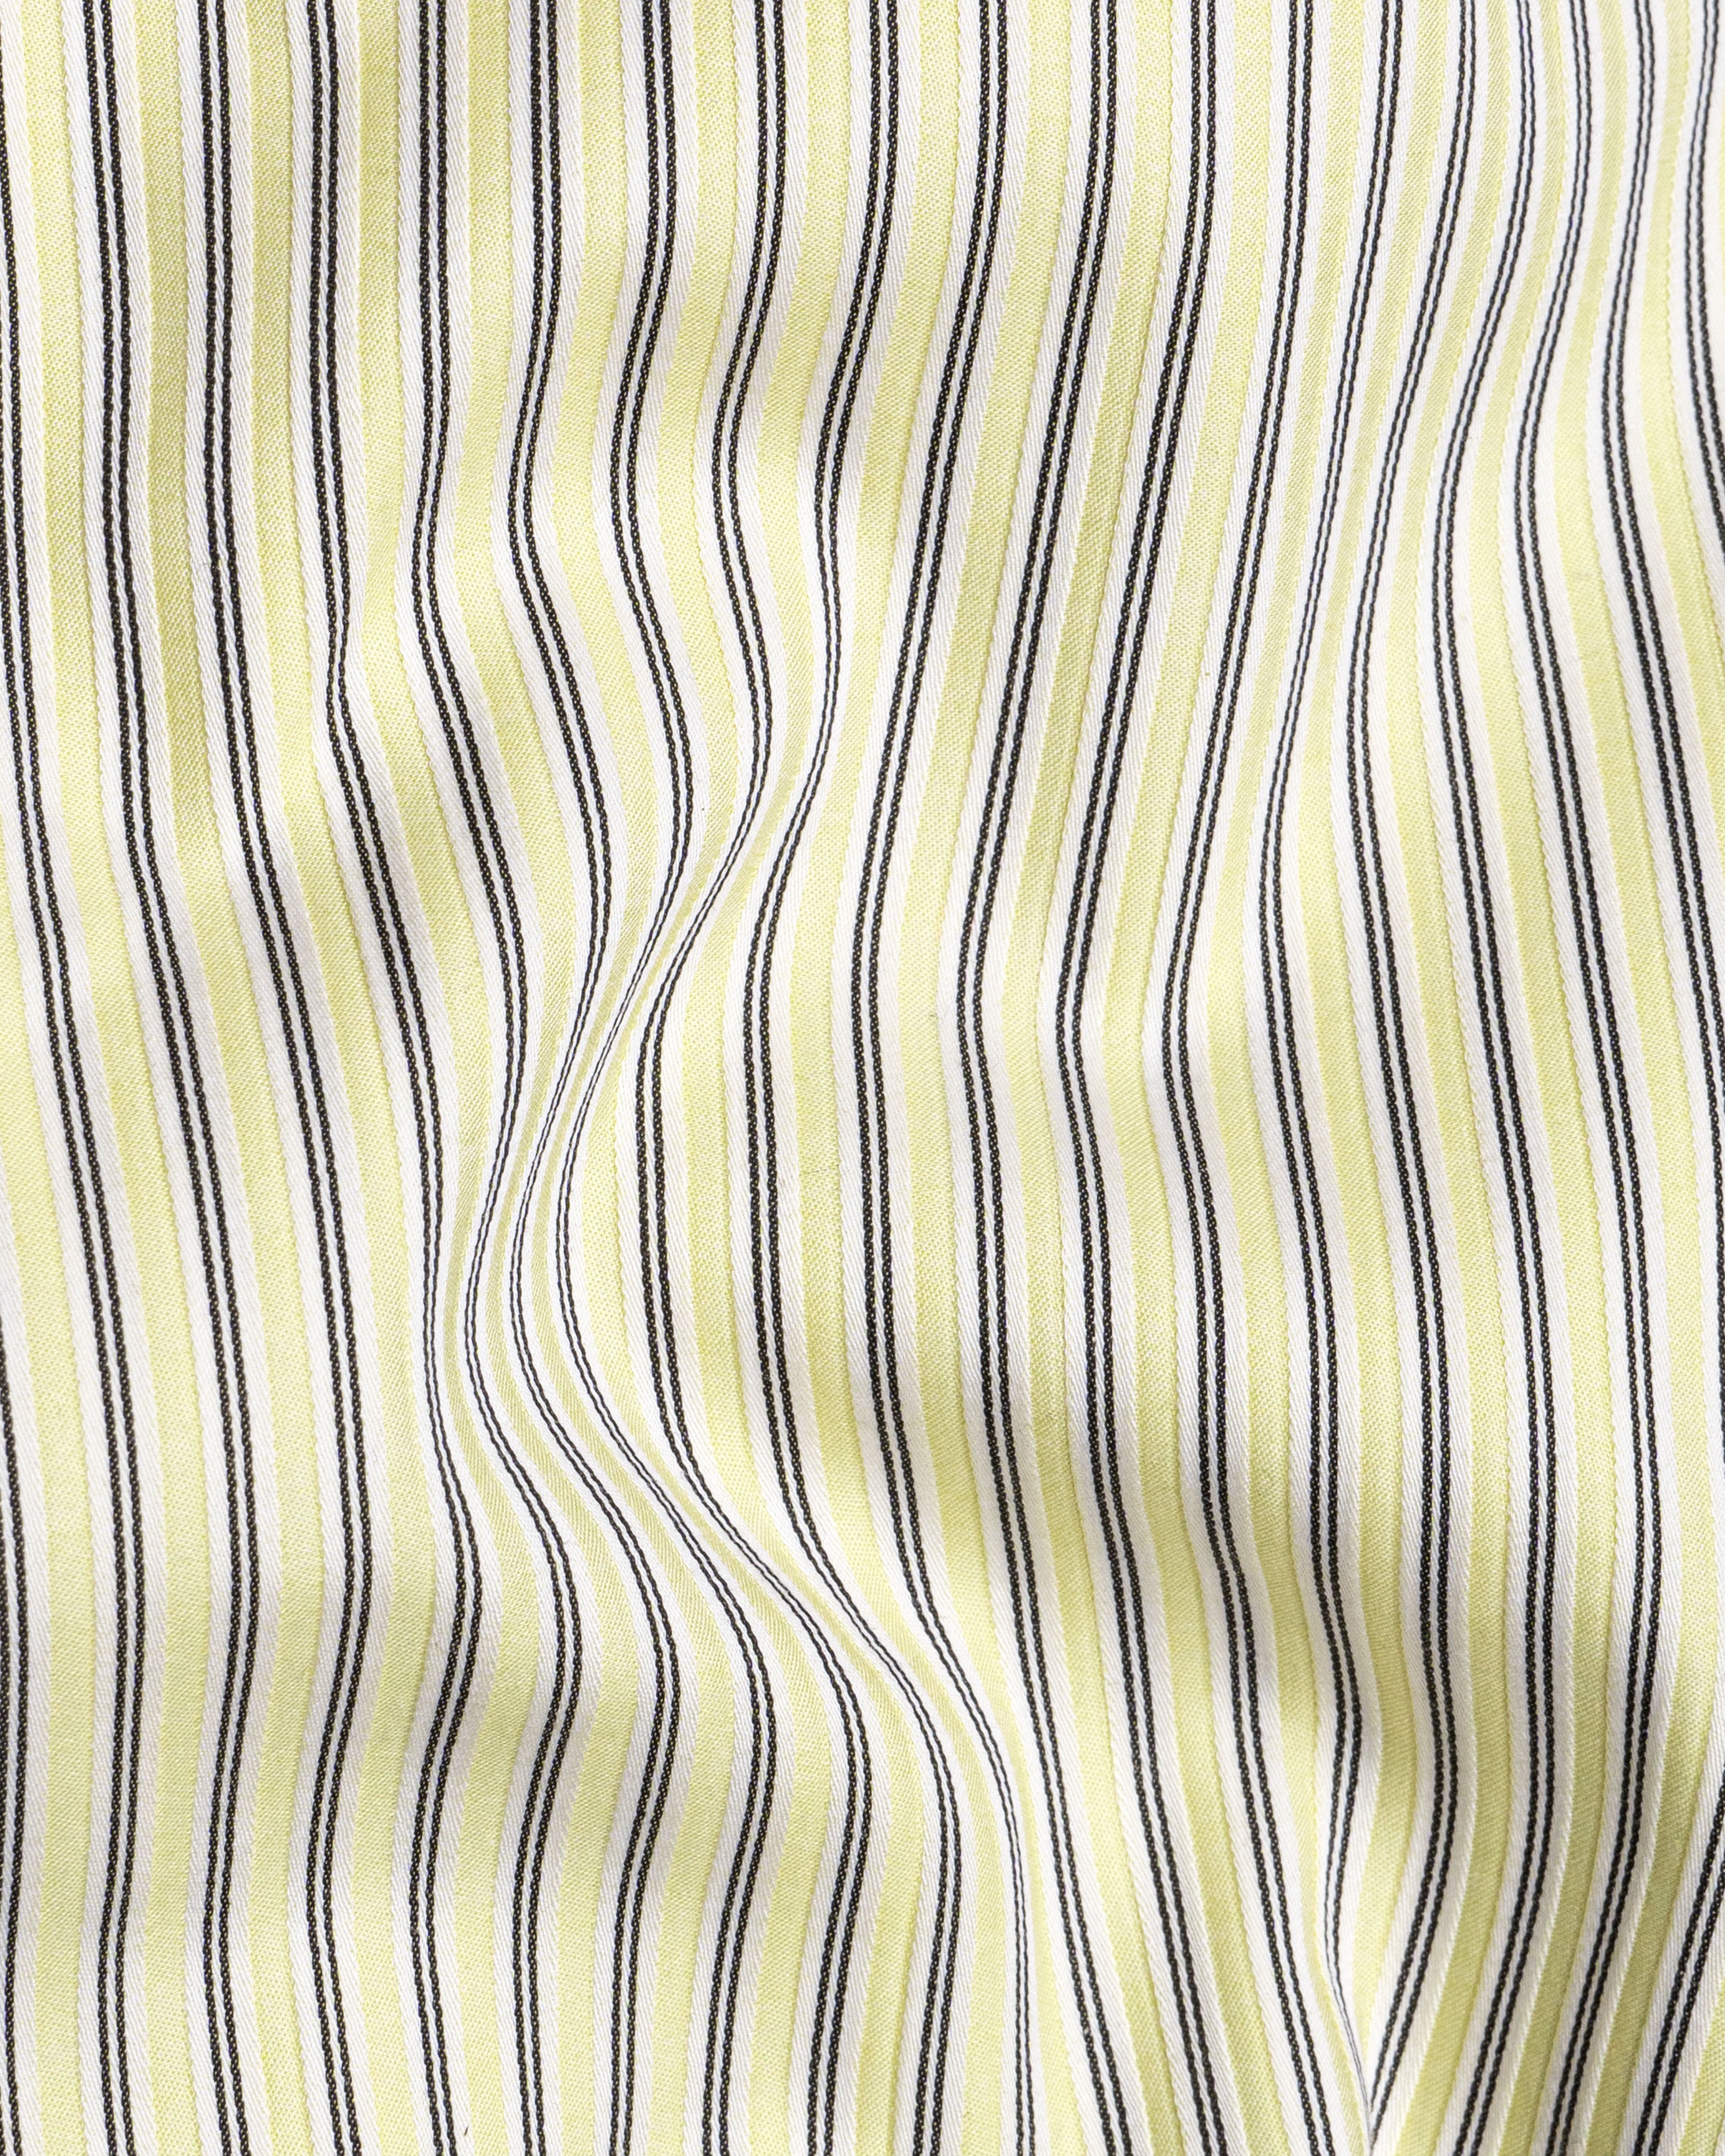 Colonial Beige Striped Dobby Premium Giza Cotton Designer Shirt  8753-P254-38,8753-P254-H-38,8753-P254-39,8753-P254-H-39,8753-P254-40,8753-P254-H-40,8753-P254-42,8753-P254-H-42,8753-P254-44,8753-P254-H-44,8753-P254-46,8753-P254-H-46,8753-P254-48,8753-P254-H-48,8753-P254-50,8753-P254-H-50,8753-P254-52,8753-P254-H-52